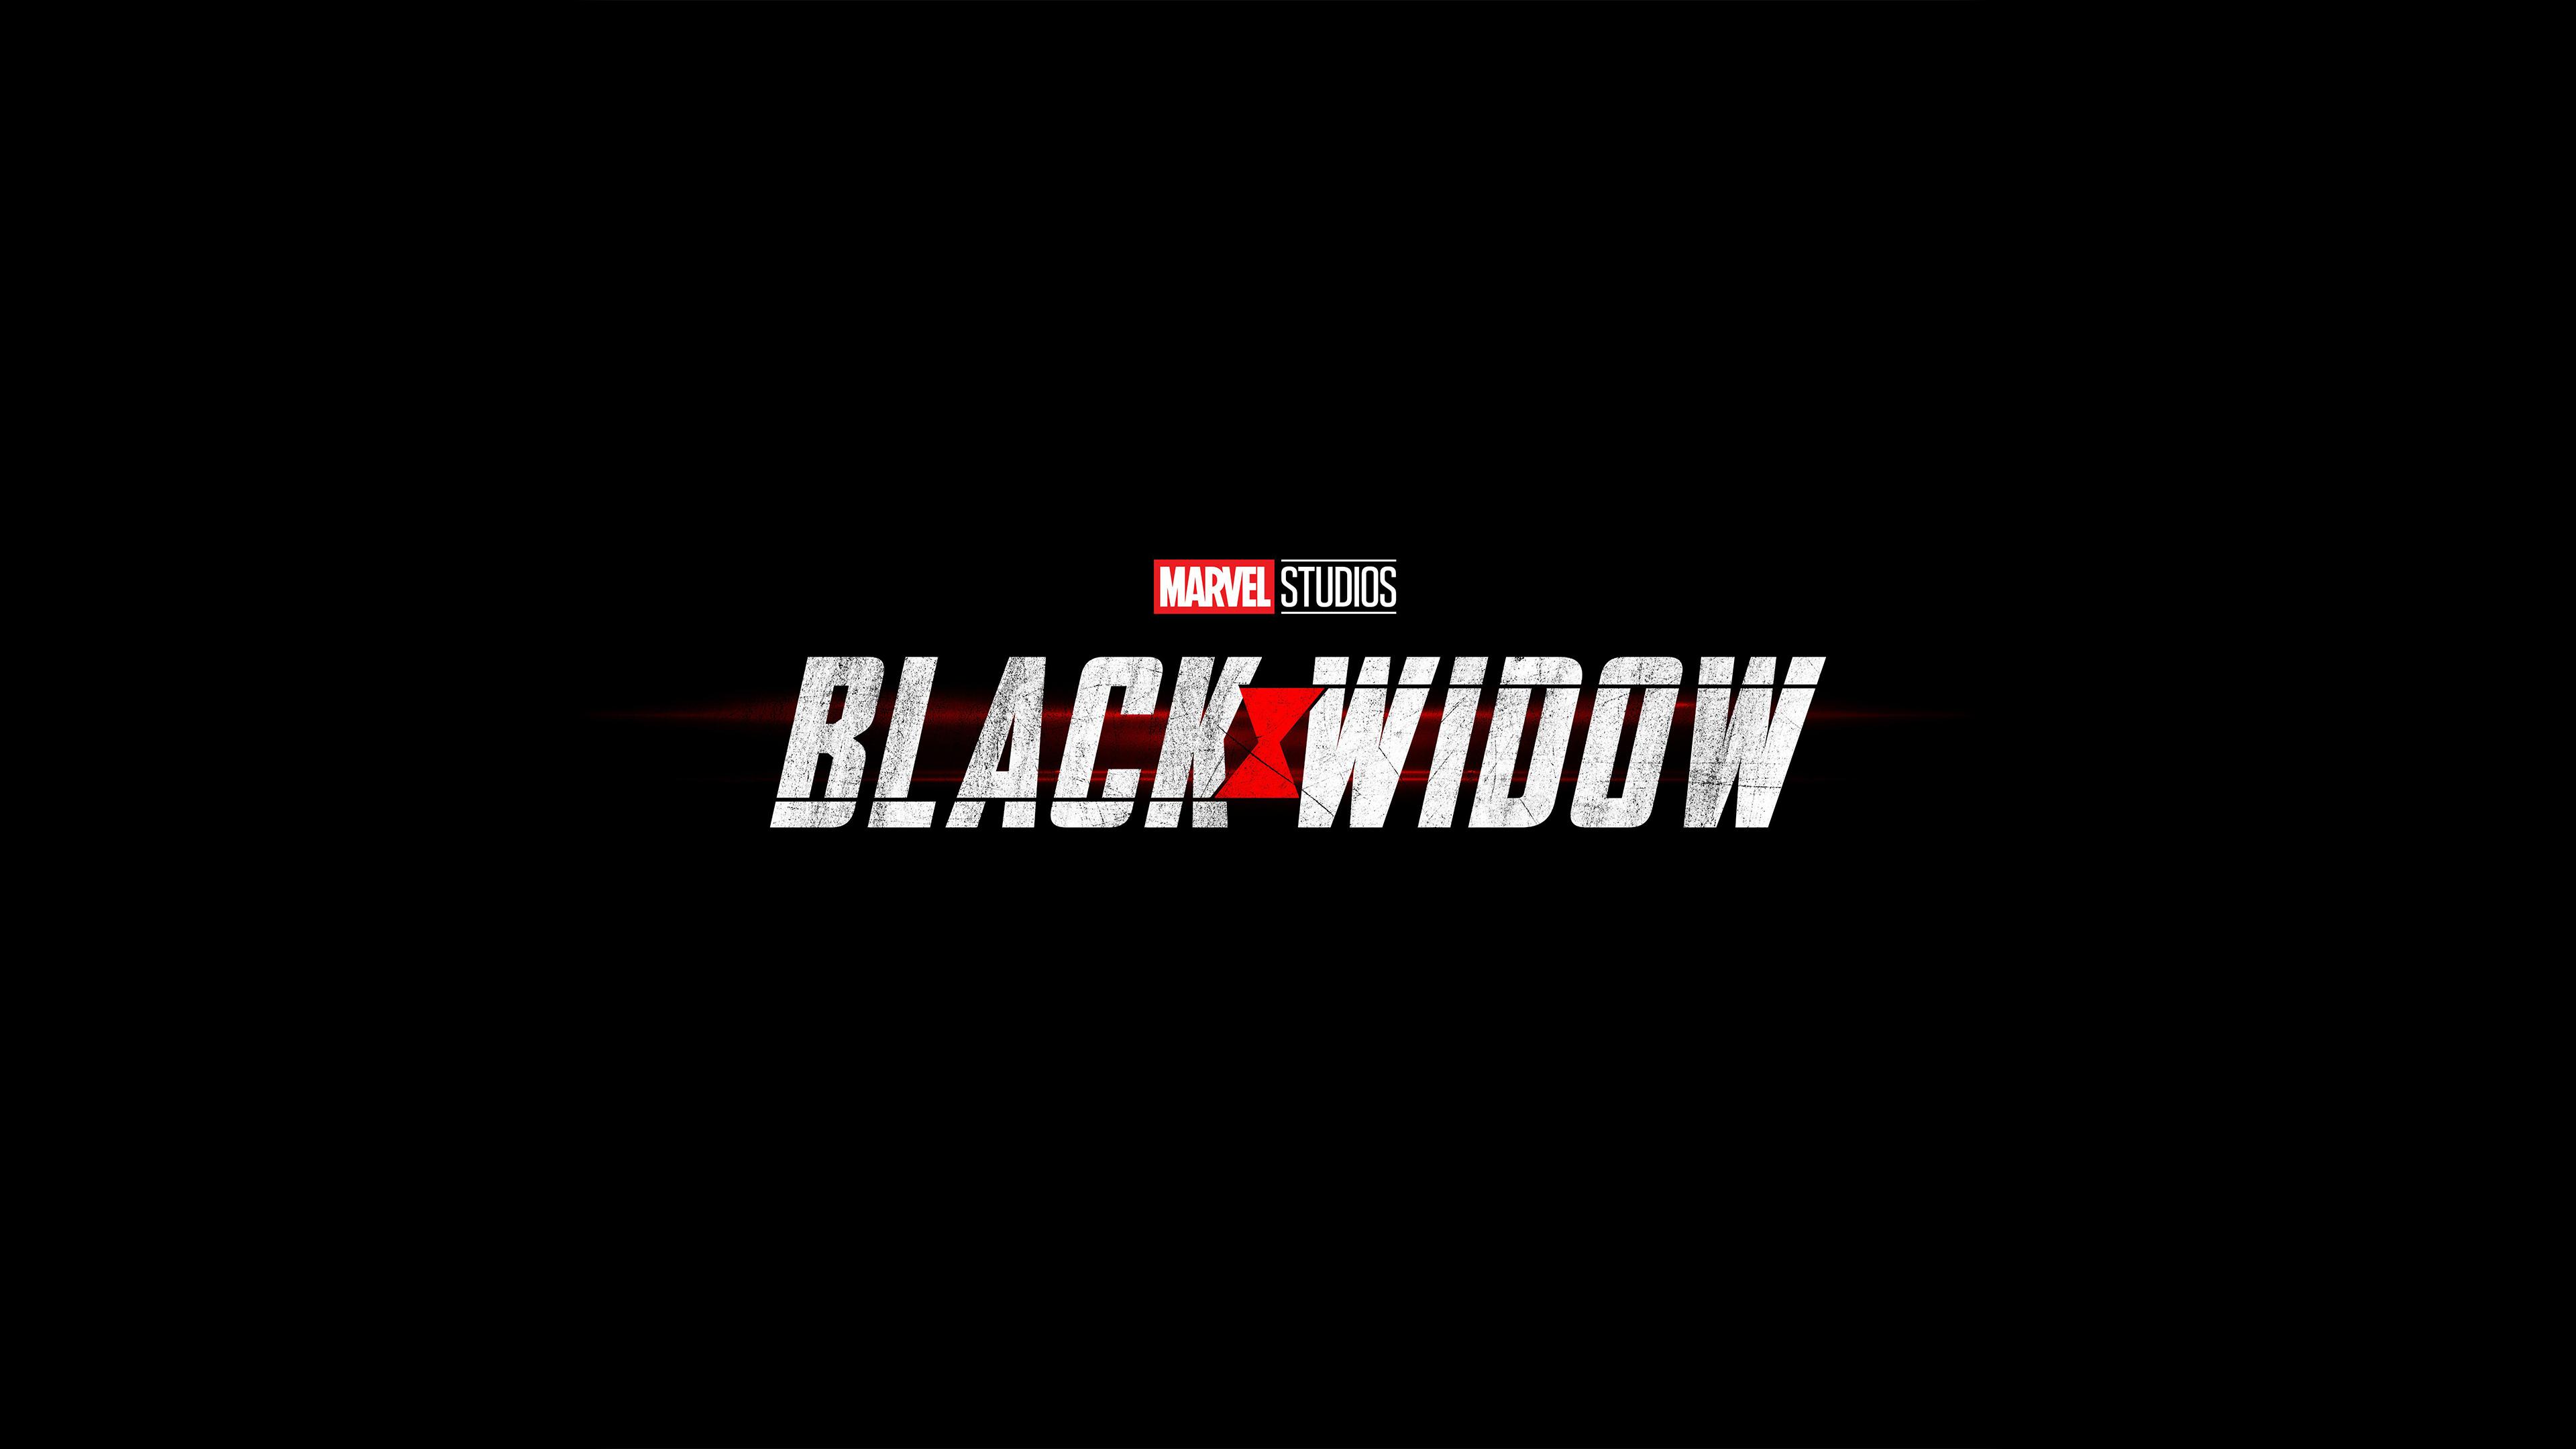 Black Widow 4k Ultra HD Wallpaper. Background Imagex2160